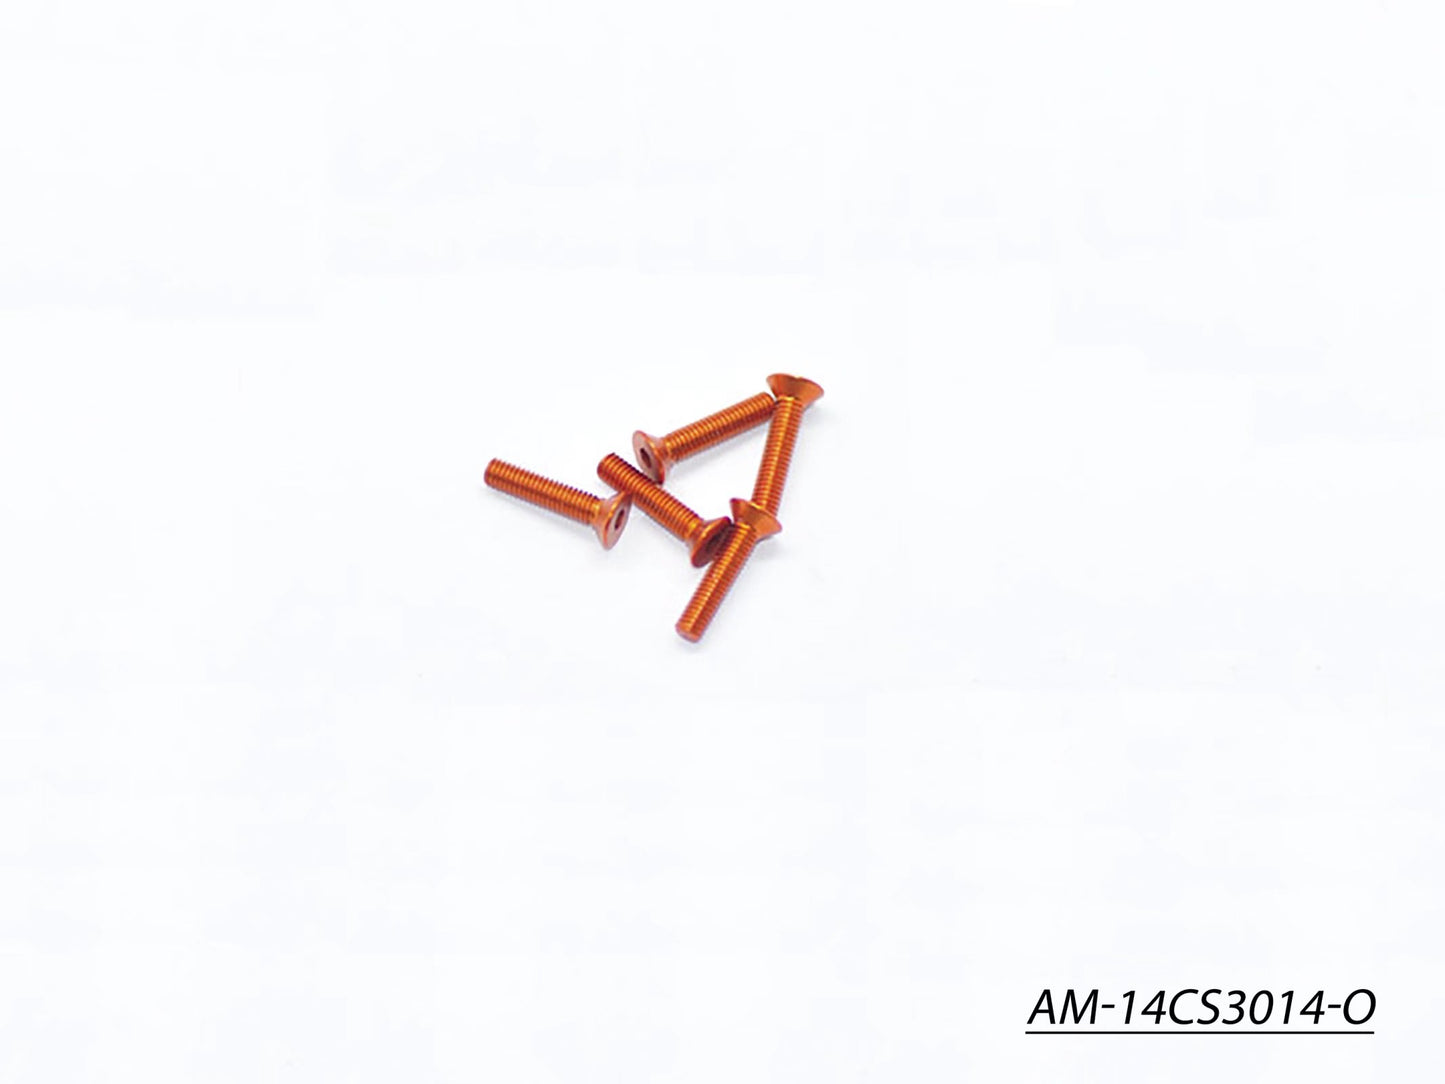 Alu Screw Allen Countersunk M3X14 Orange (7075) (5) (AM-14CS3014-O)